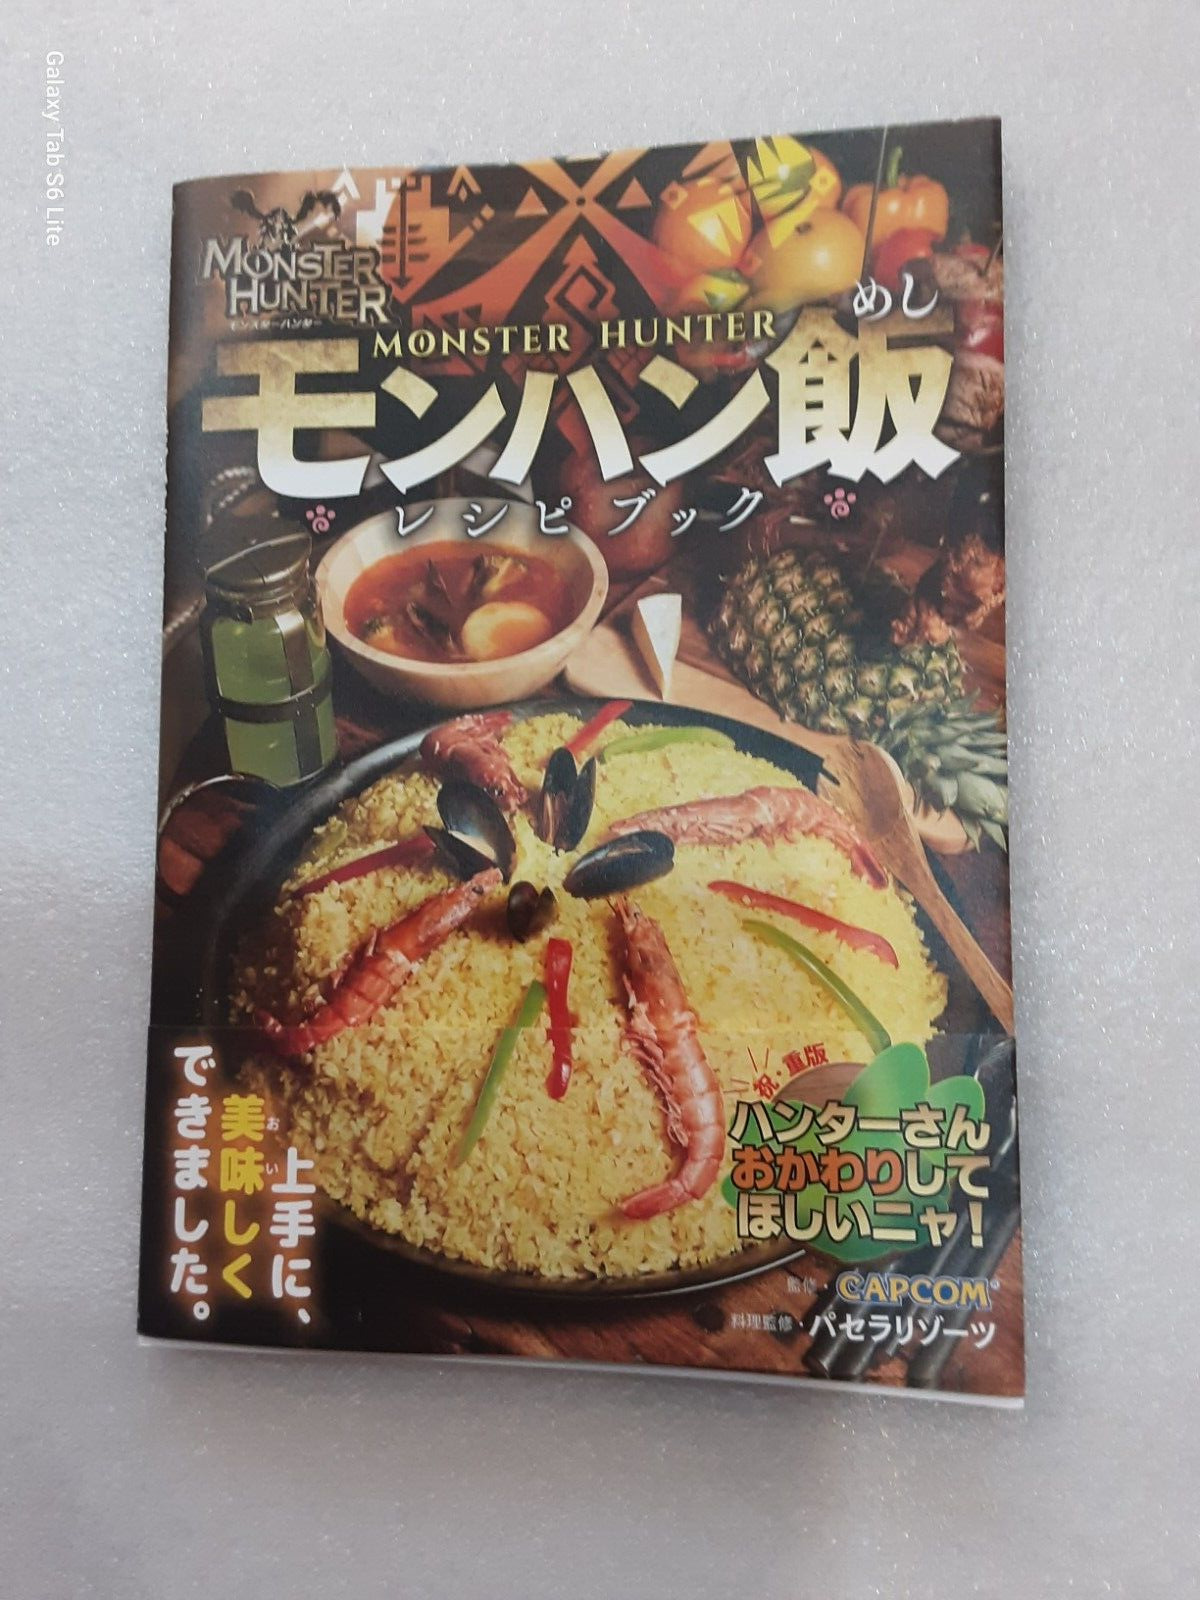 NEW Capcom MONSTER HUNTER Cookbook Cooking Recipes US Seller